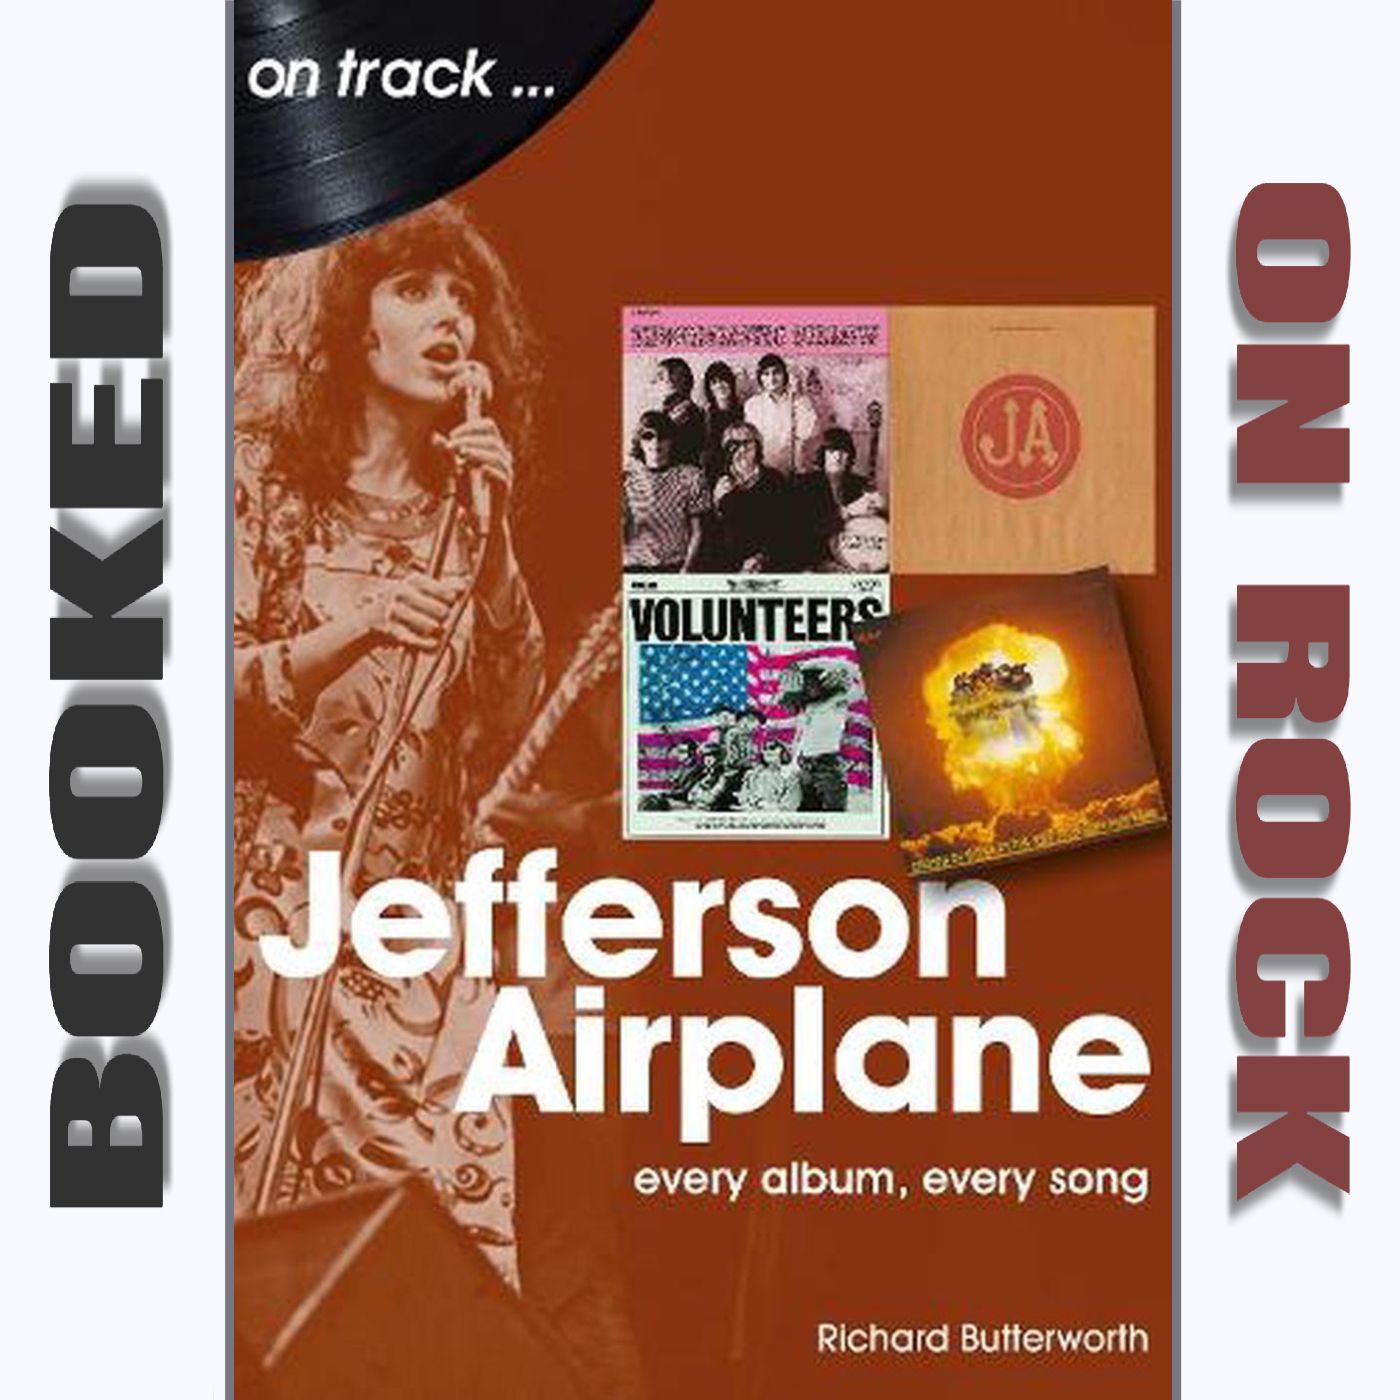 Jefferson Airplane's 'Surrealistic Pillow' at 56/w Richard Butterworth (